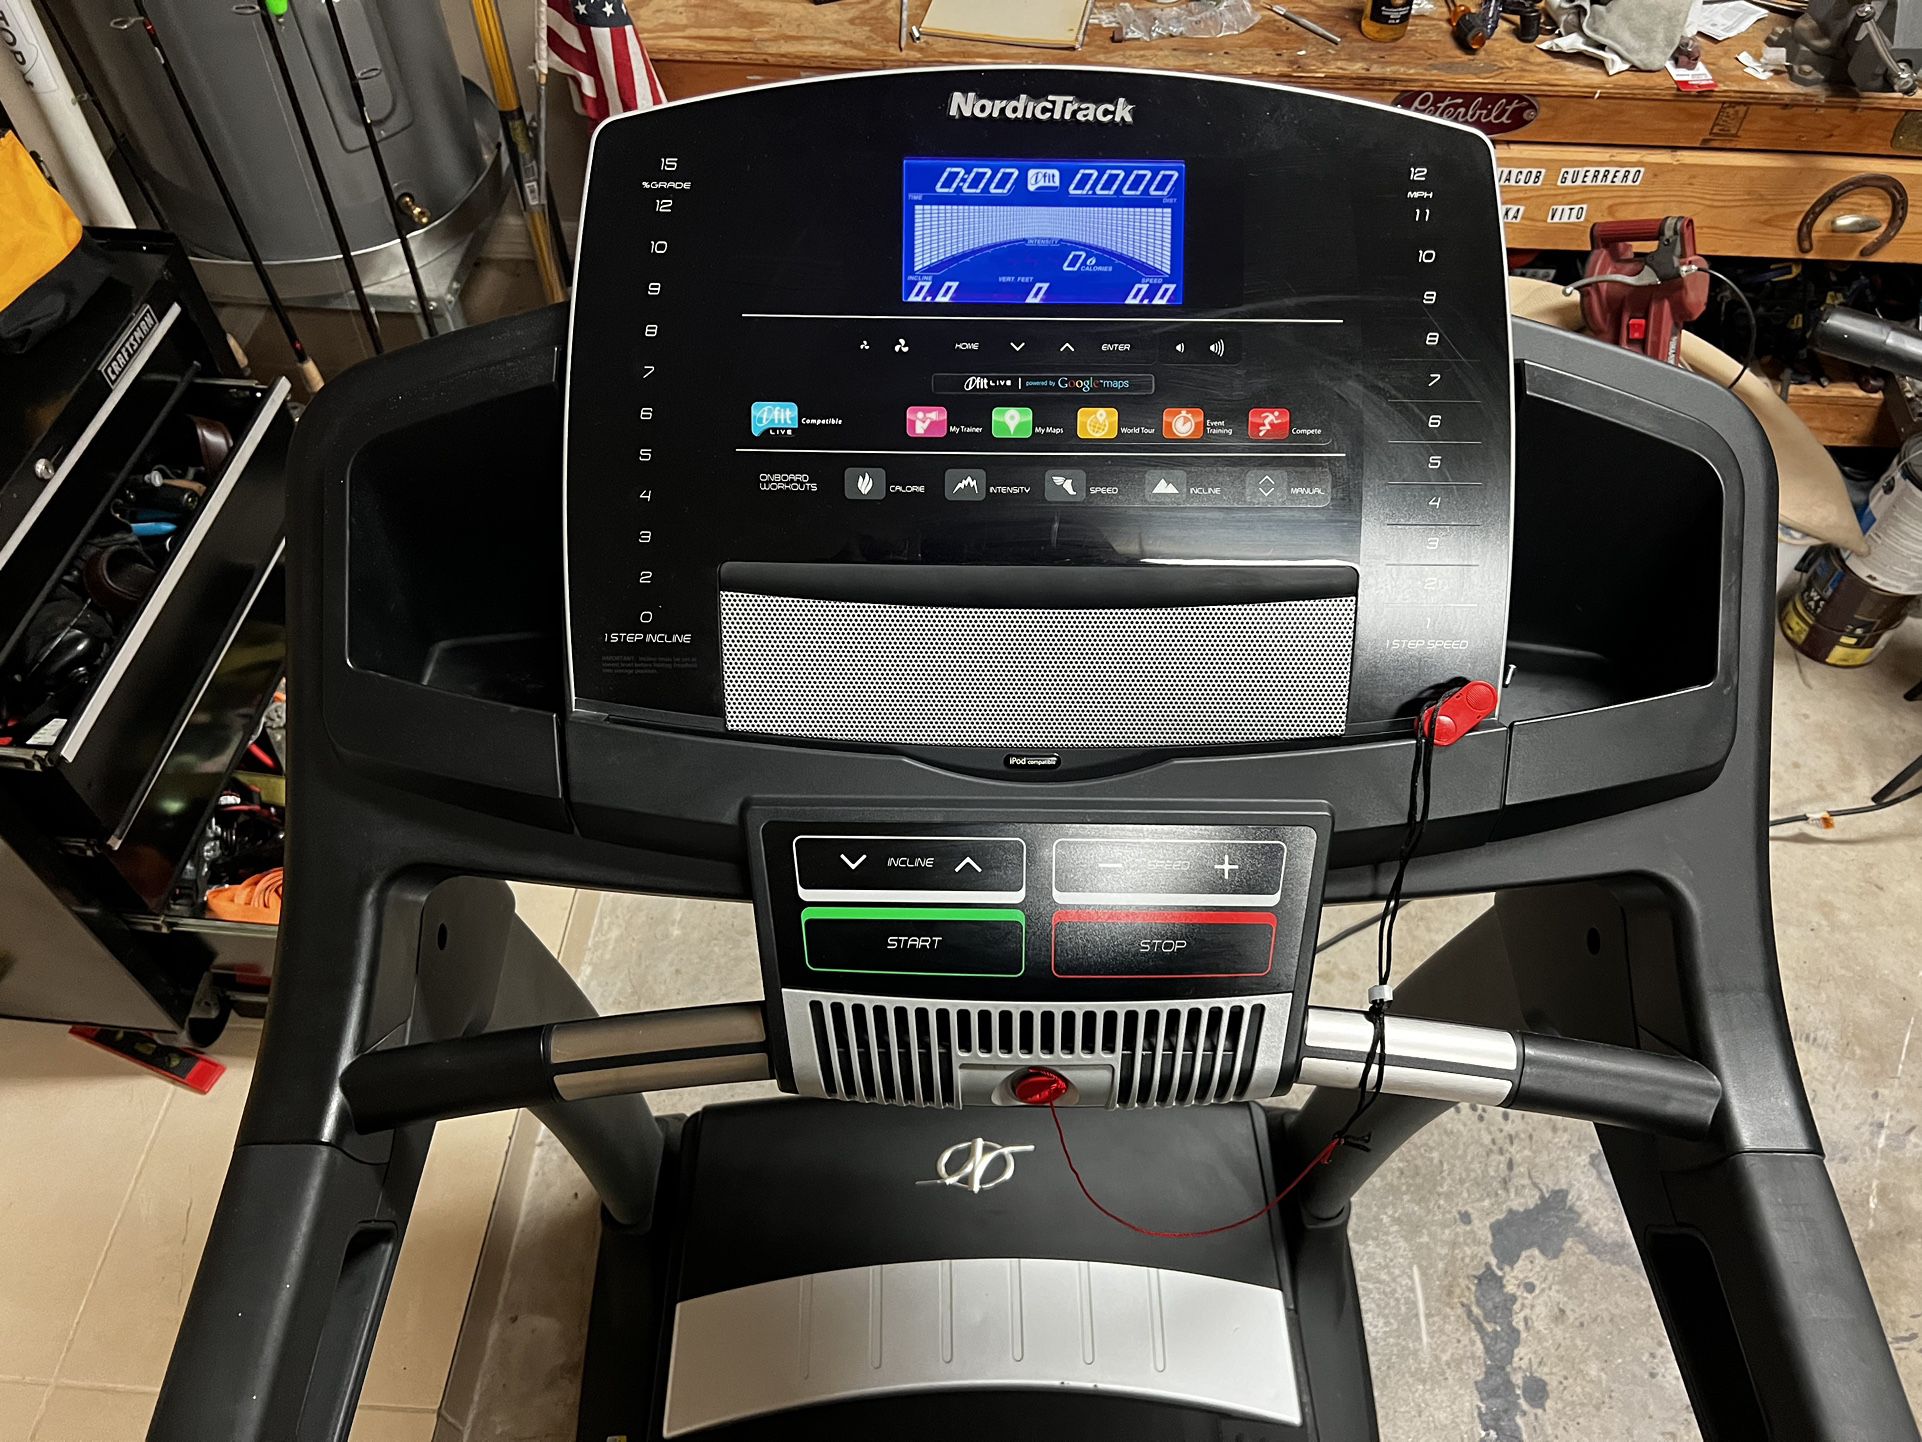 Nordic Track Treadmill c900 Quadflex Cushioning